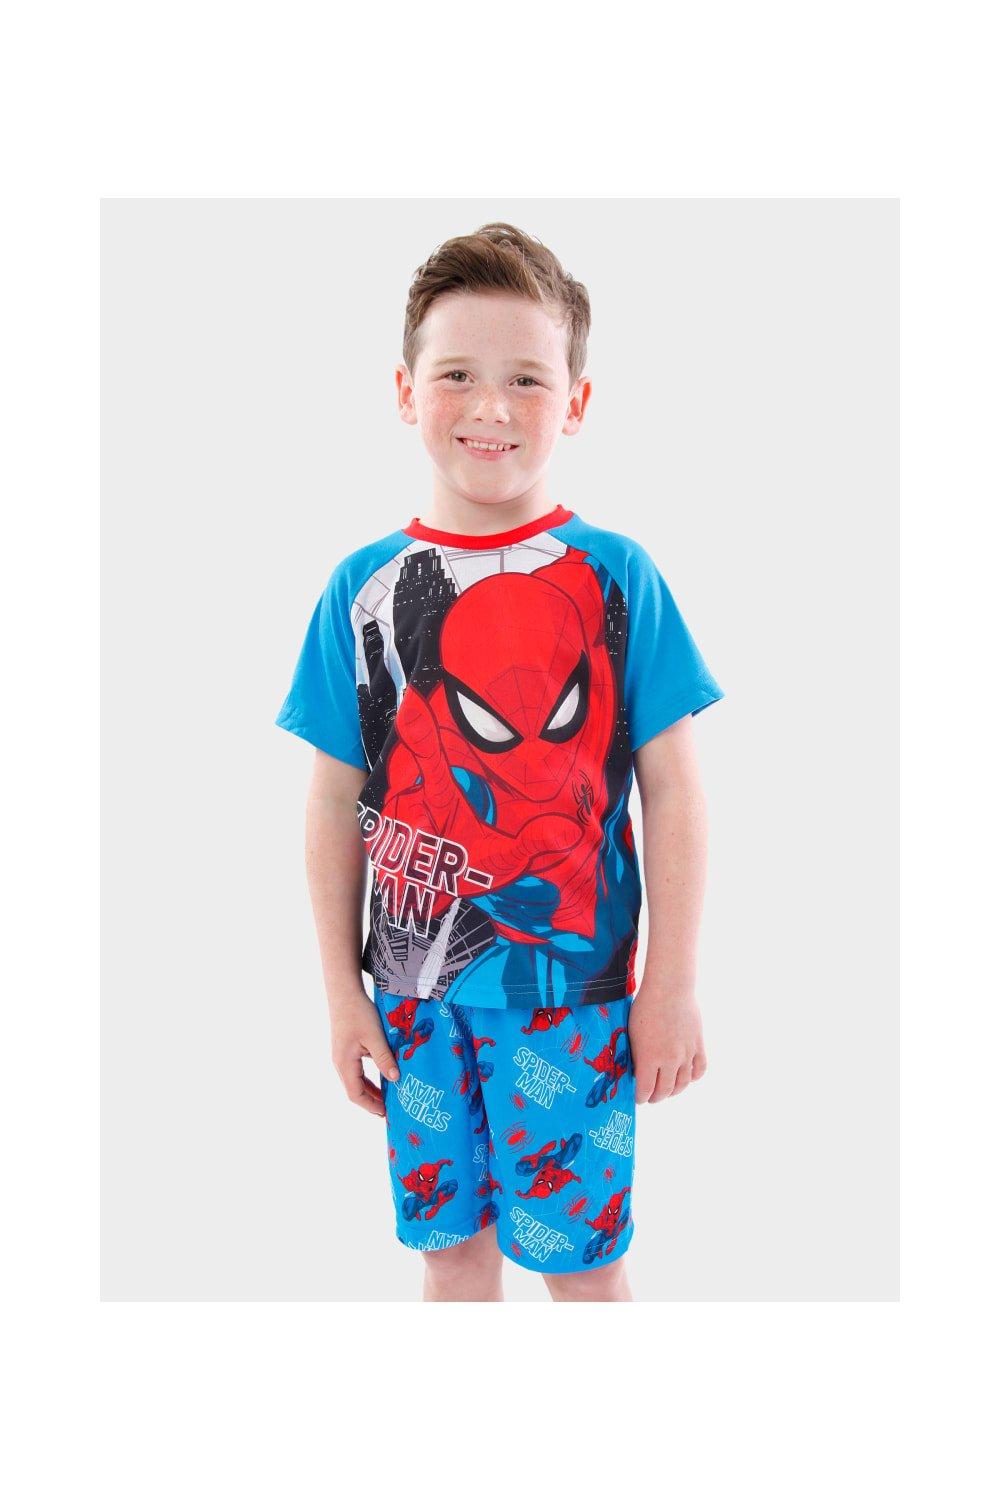 Spiderman Short Pyjamas